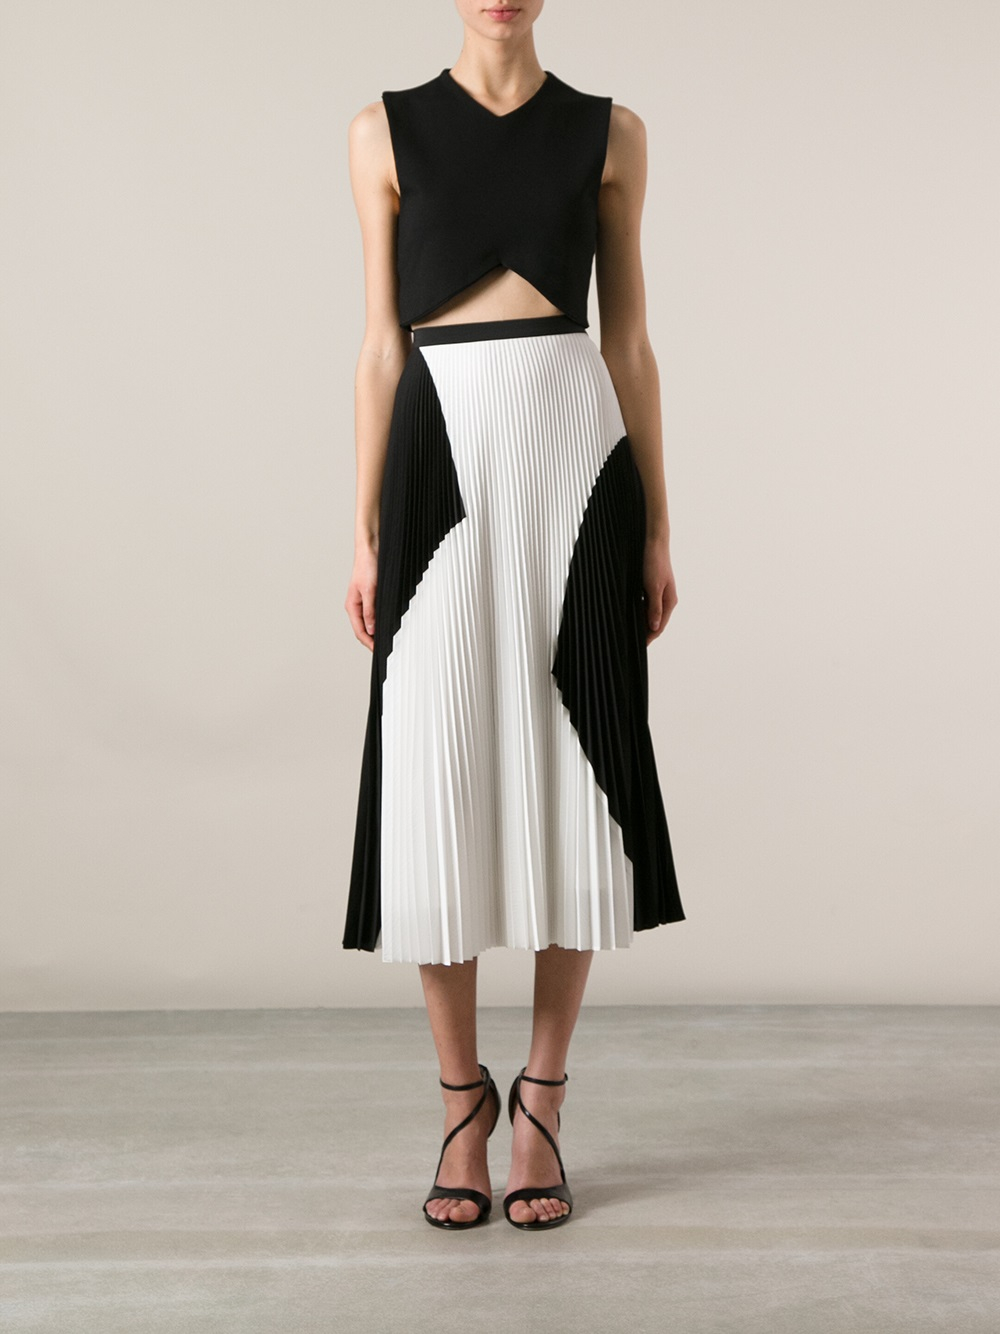 Proenza Schouler Pleated Skirt in Black (White) - Lyst